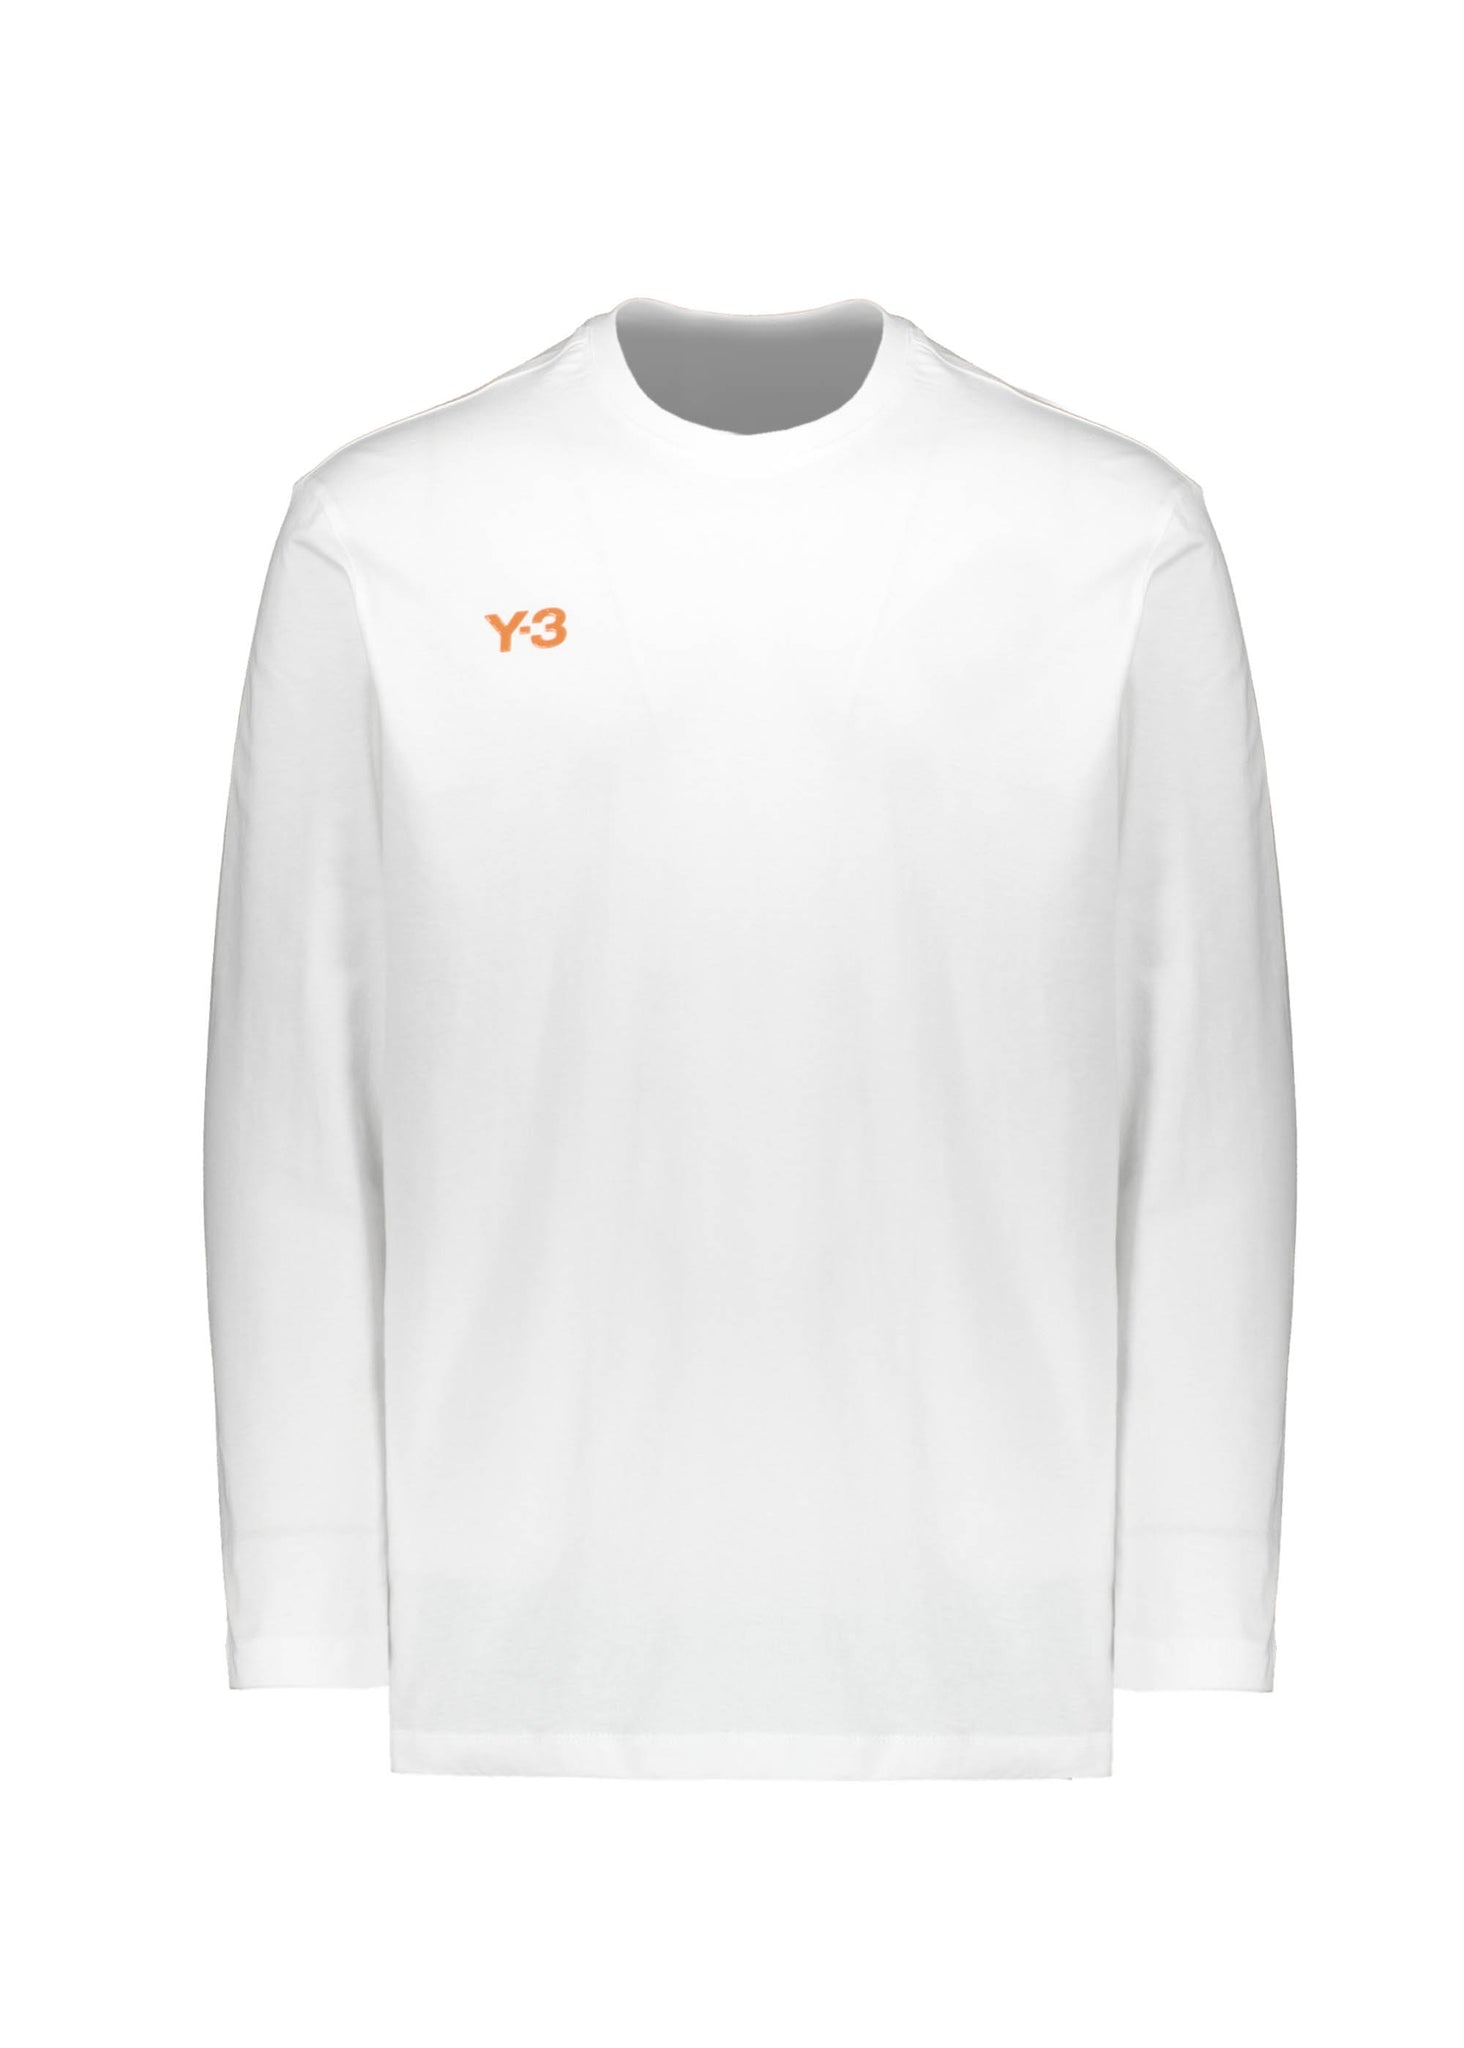 Adidas Y3 GFX Long Sleeve Tee - White